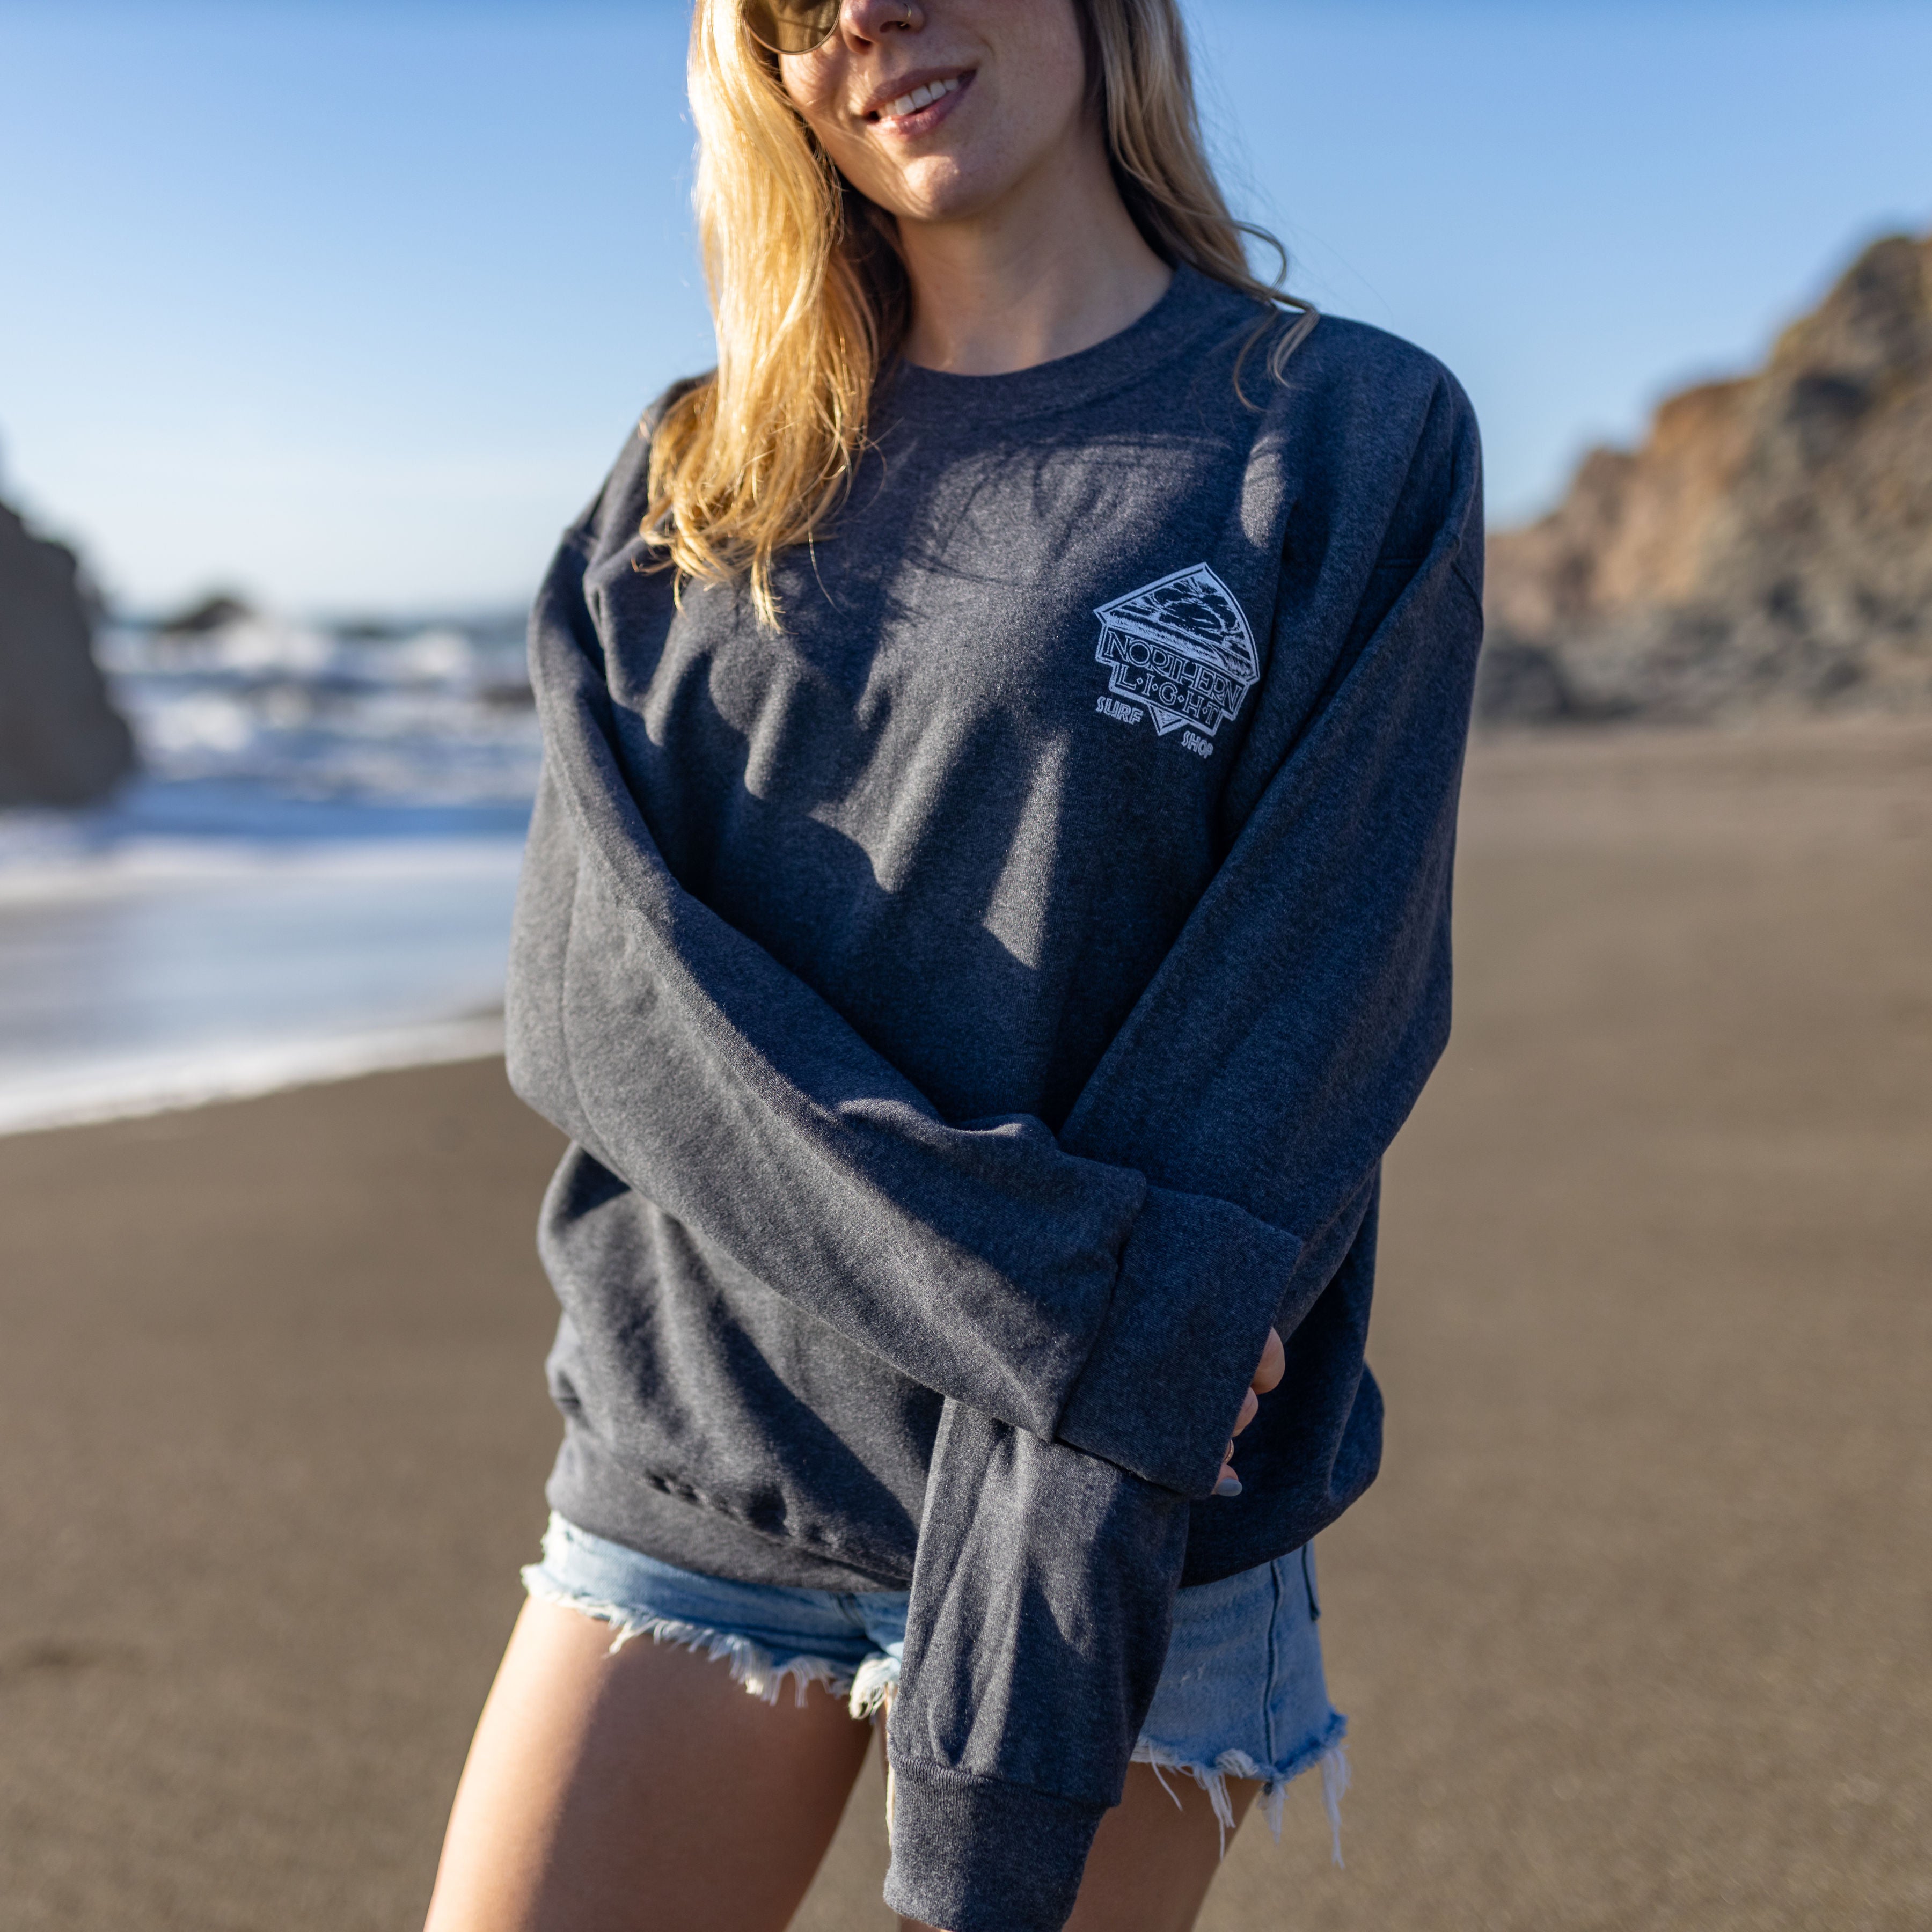 Womens Sweatshirts and Jackets - Hansen's Surf Shop